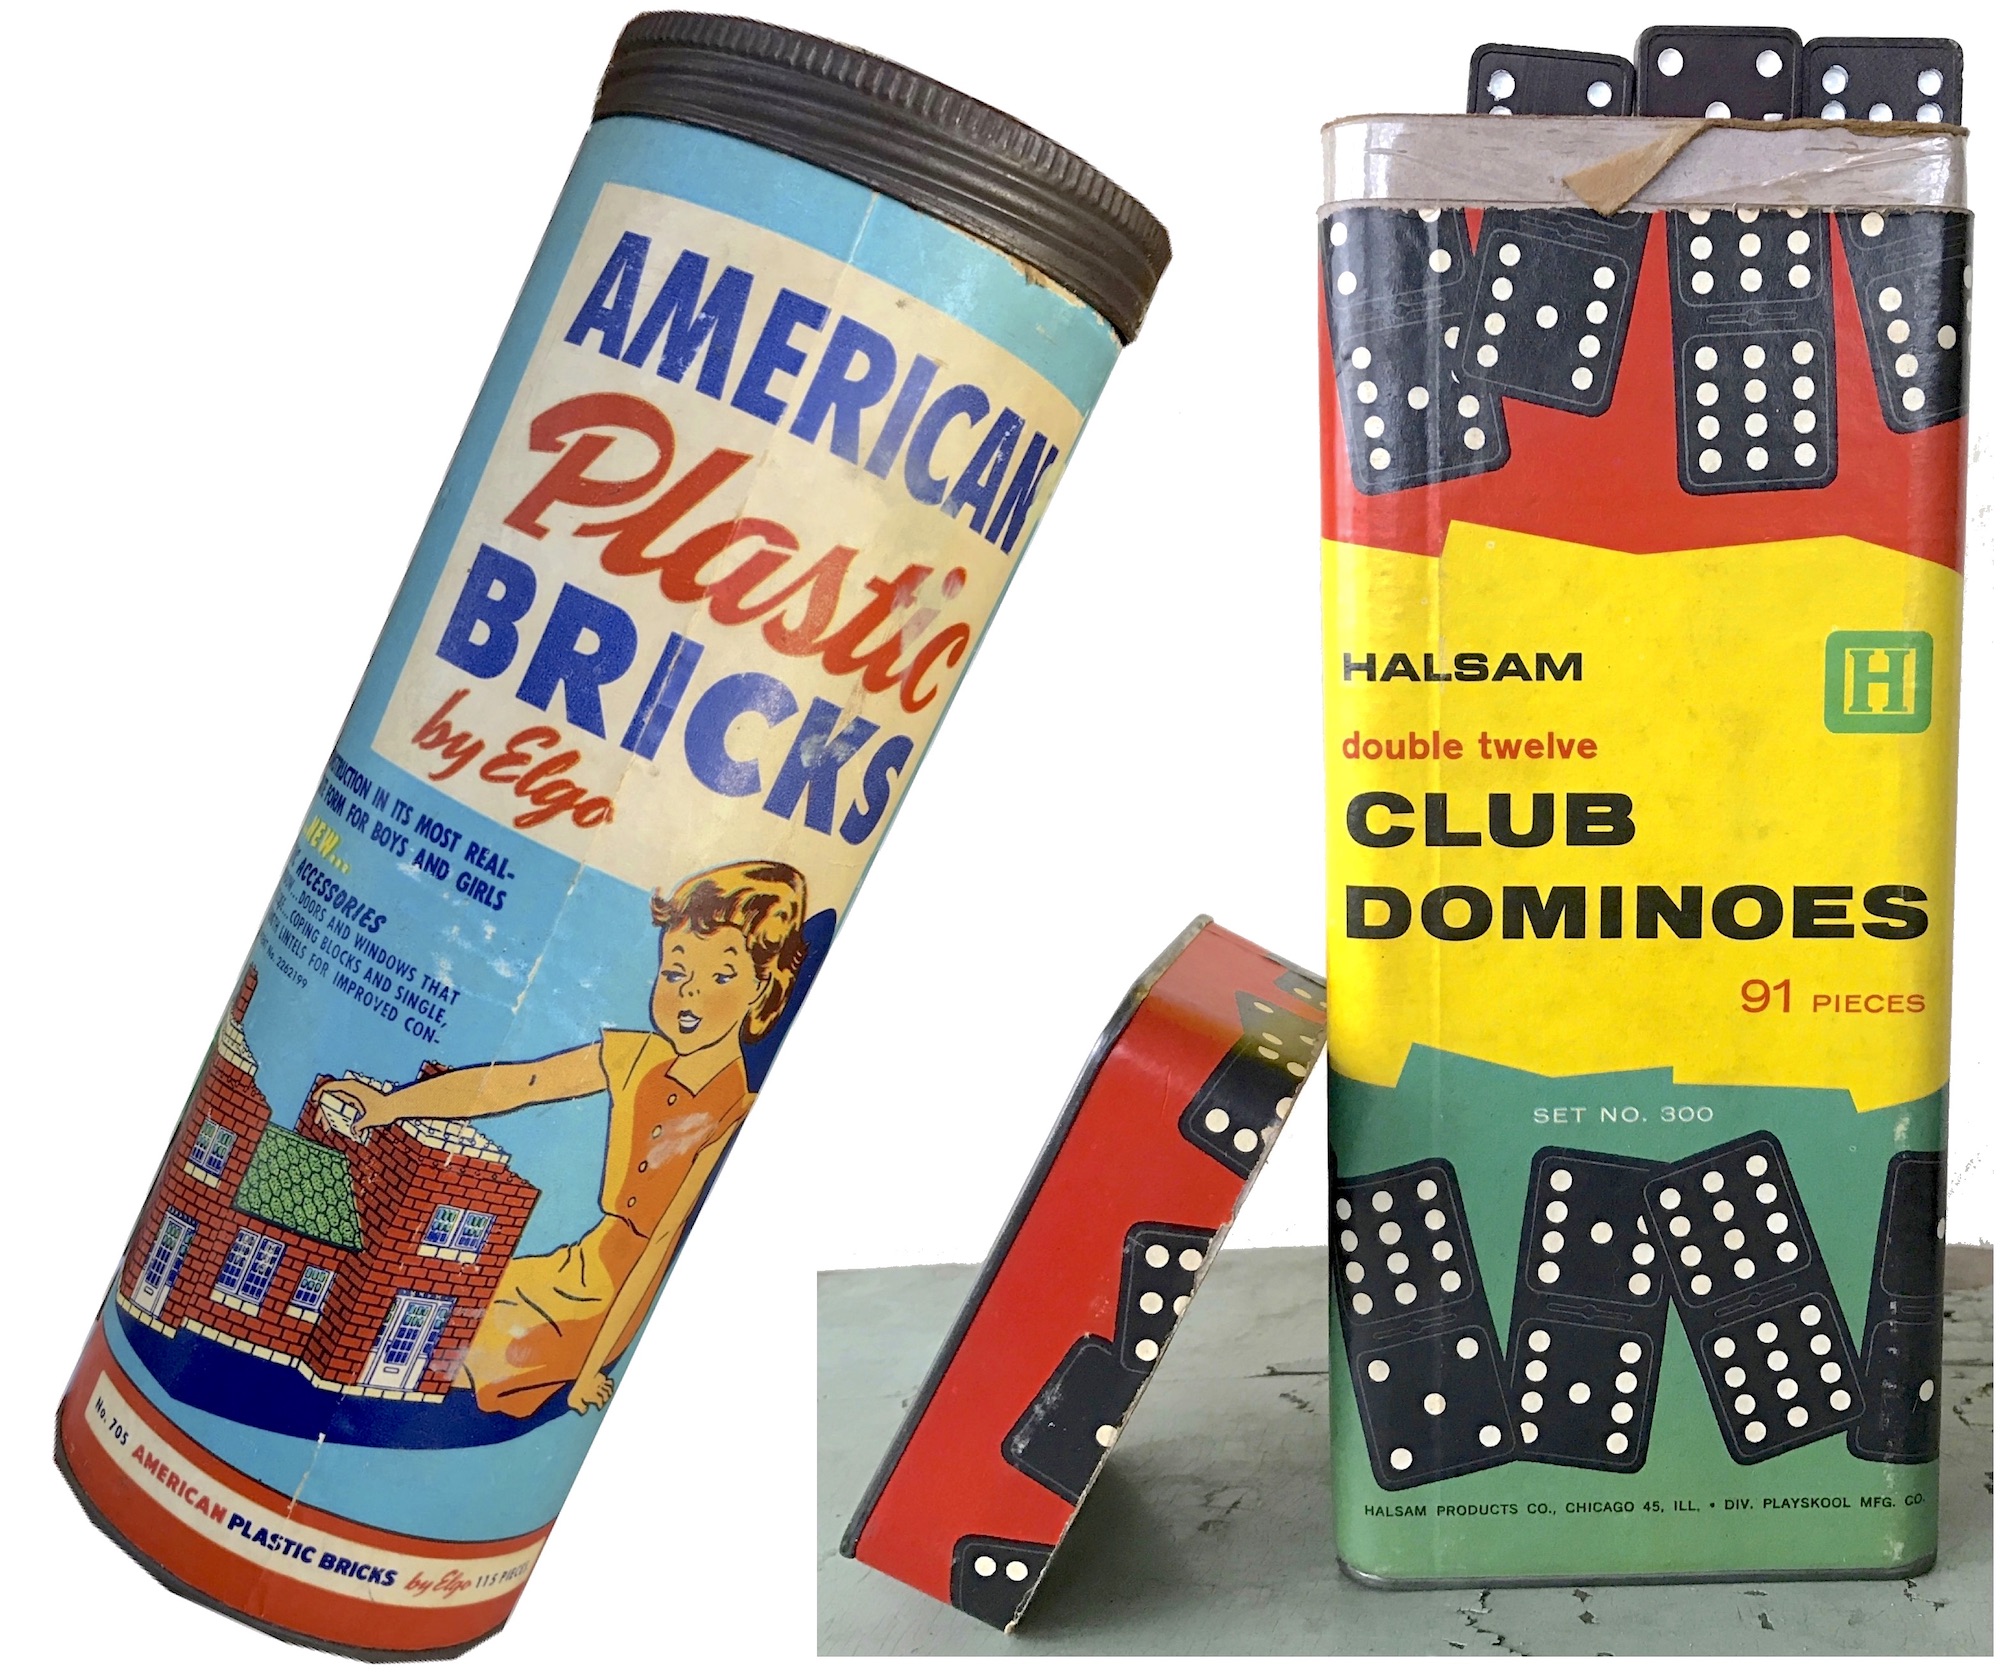 Details about   VINTAGE LARGE LOT OF Halsam American Plastic Bricks 1.5 LBS GALLON SIZE BAG 